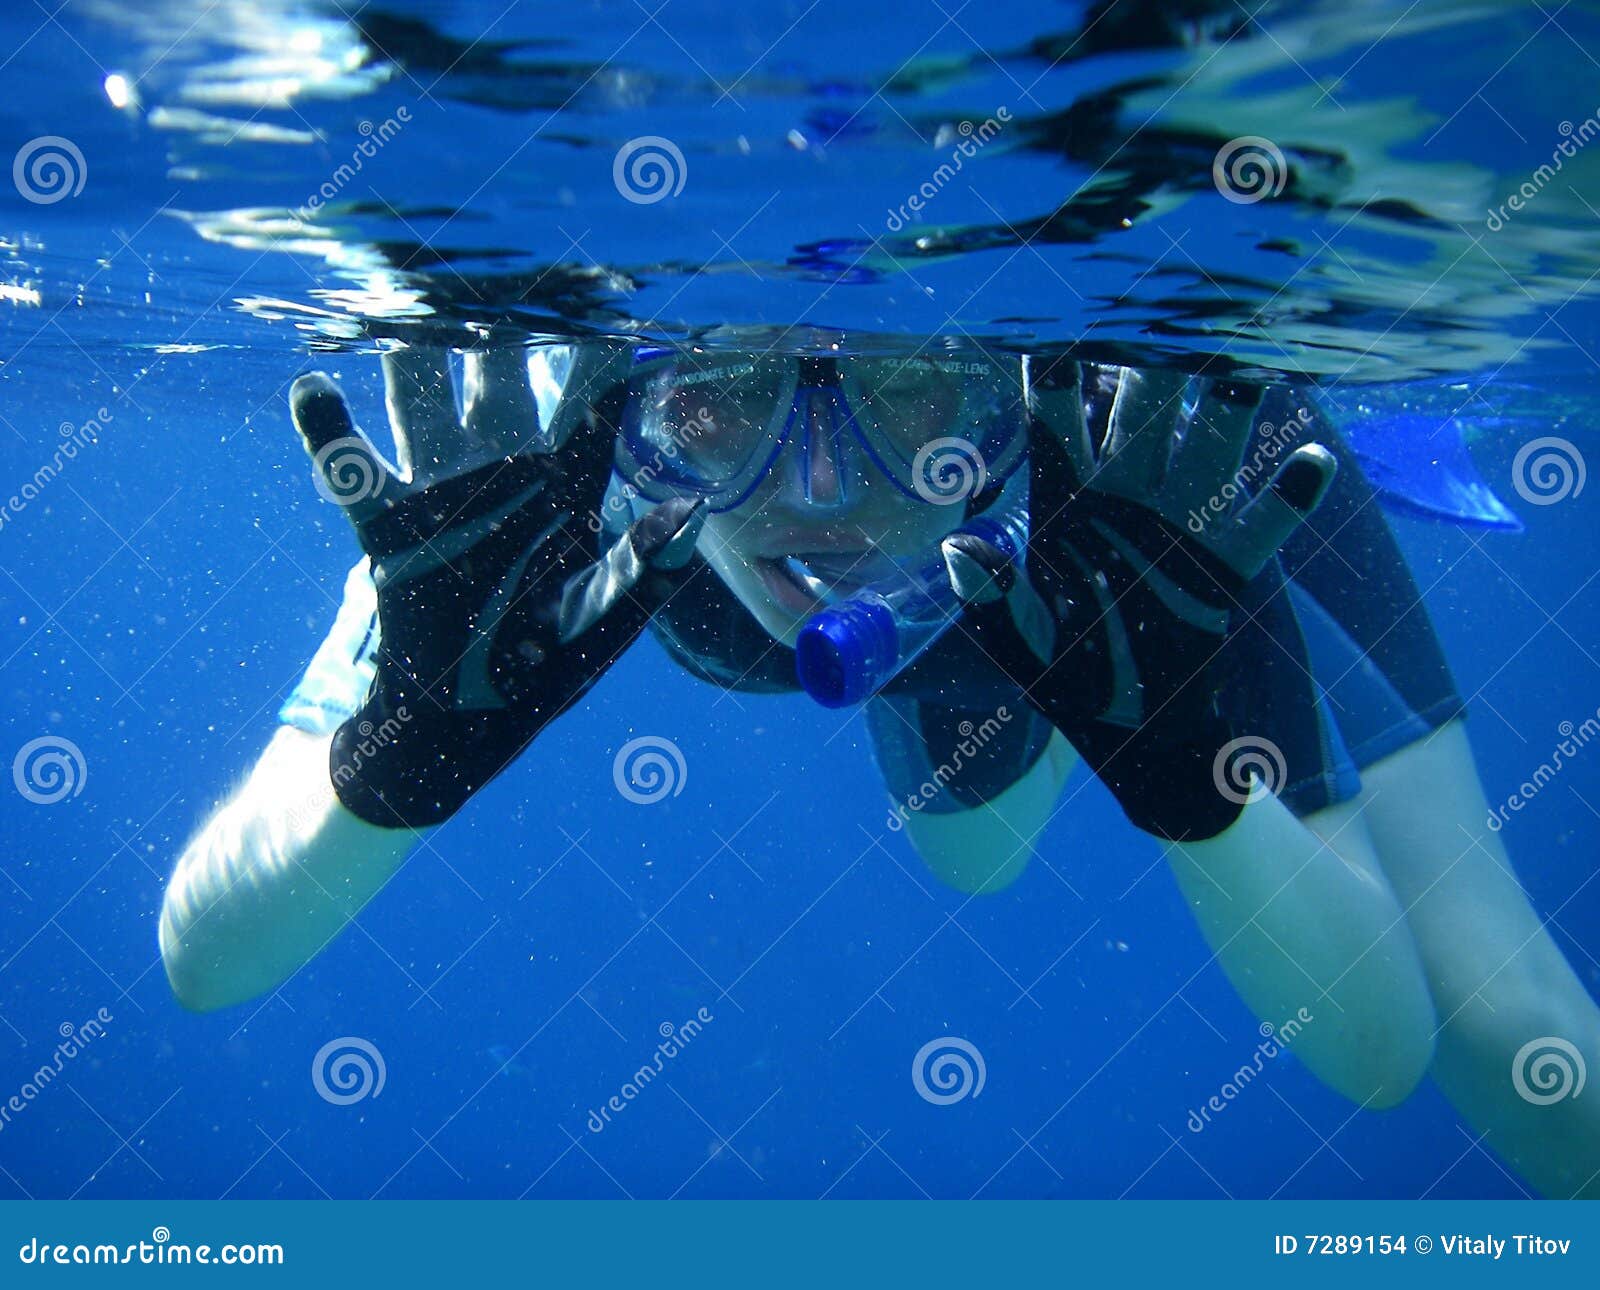 underwater snorkel fun